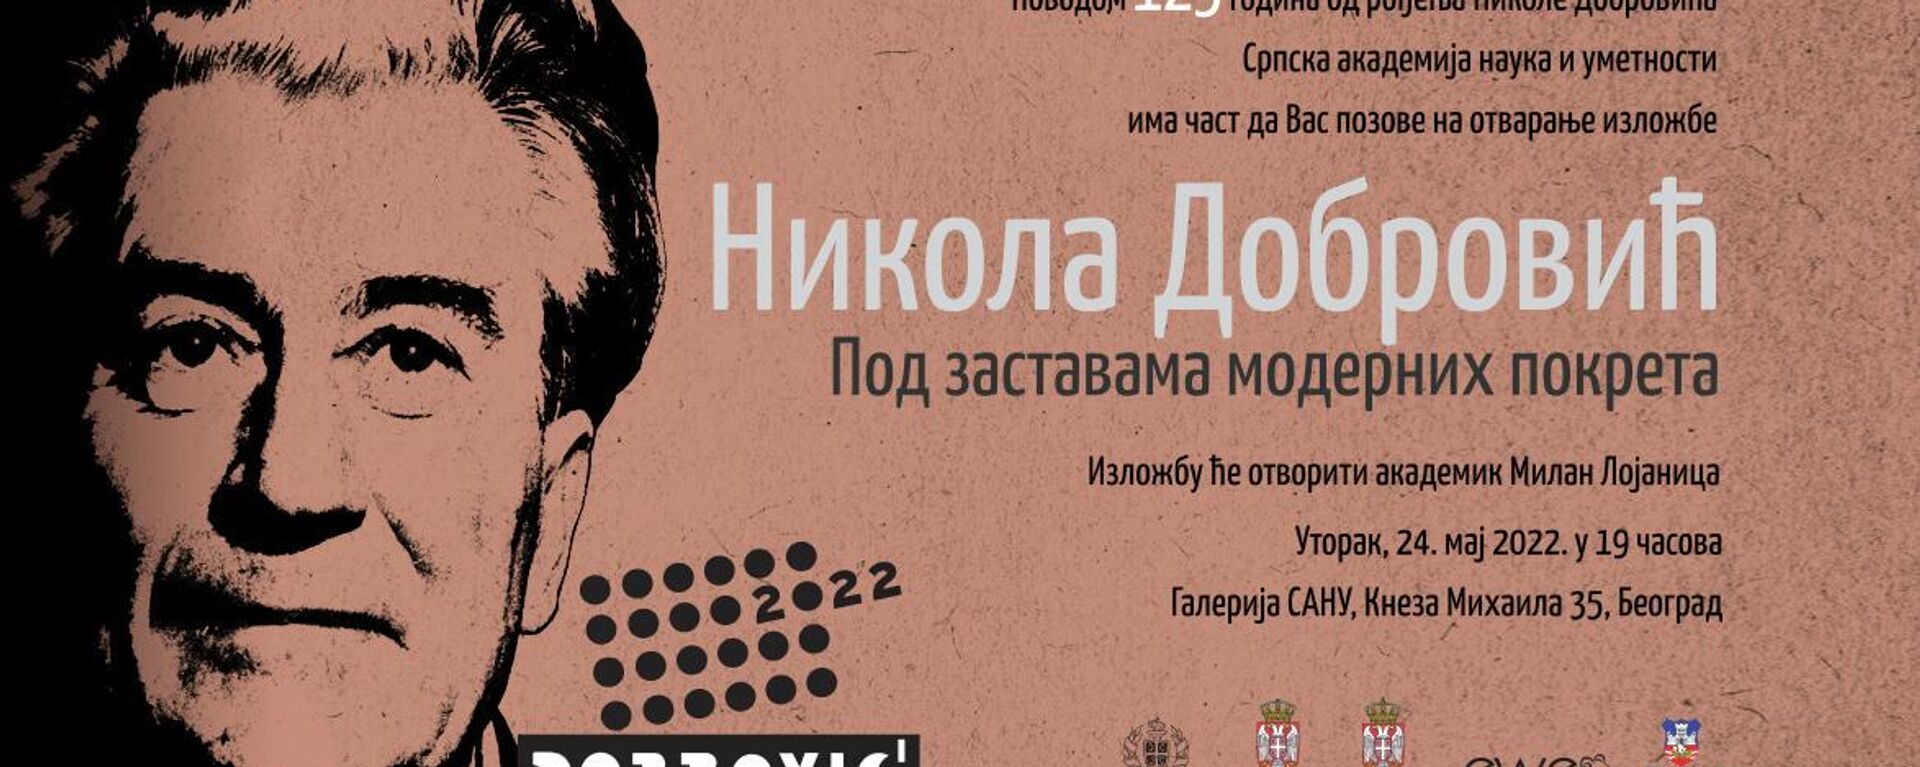 Pozivnica za izložbu „Nikola Dobrović – Pod zastavama modernih pokreta“ - Sputnik Srbija, 1920, 13.05.2022